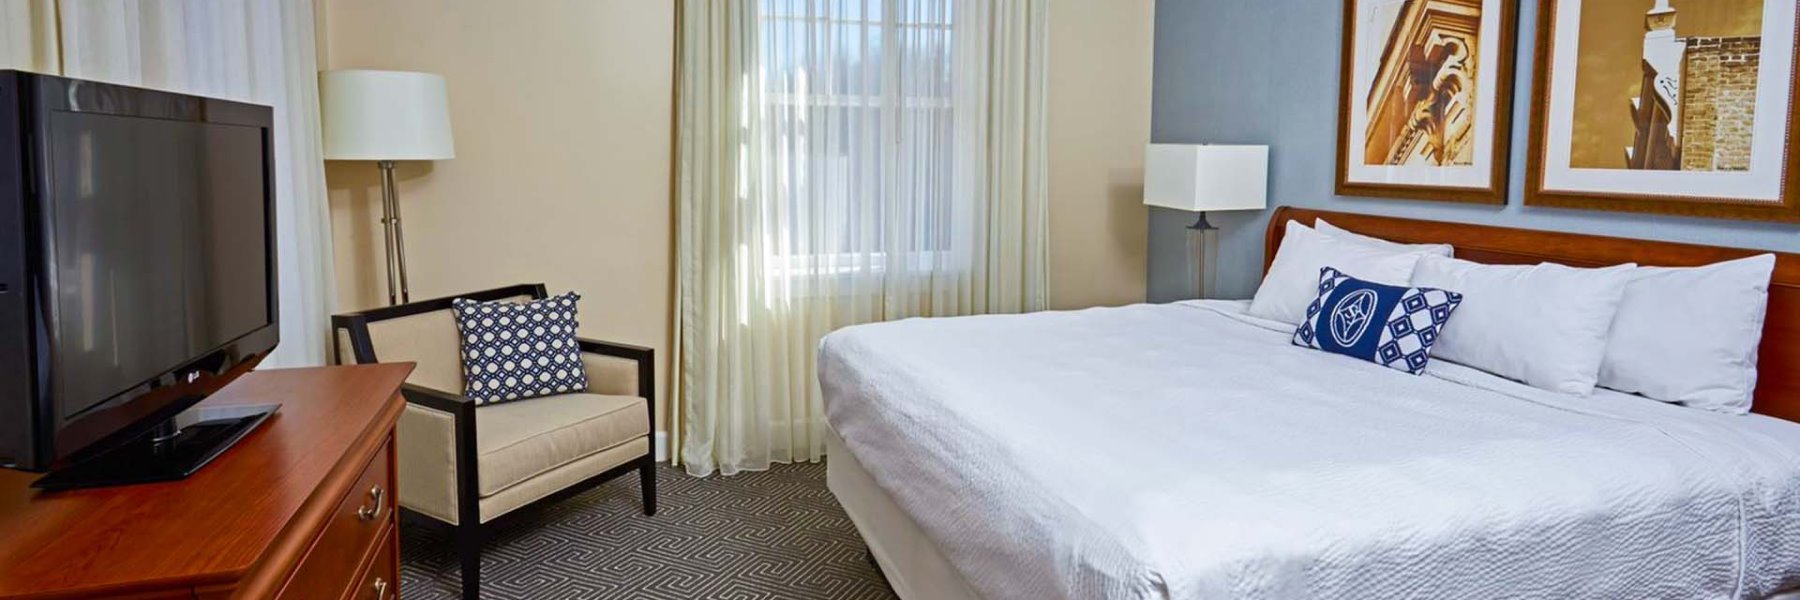 Rooms at Hotel 24 South, Staunton, Virginia